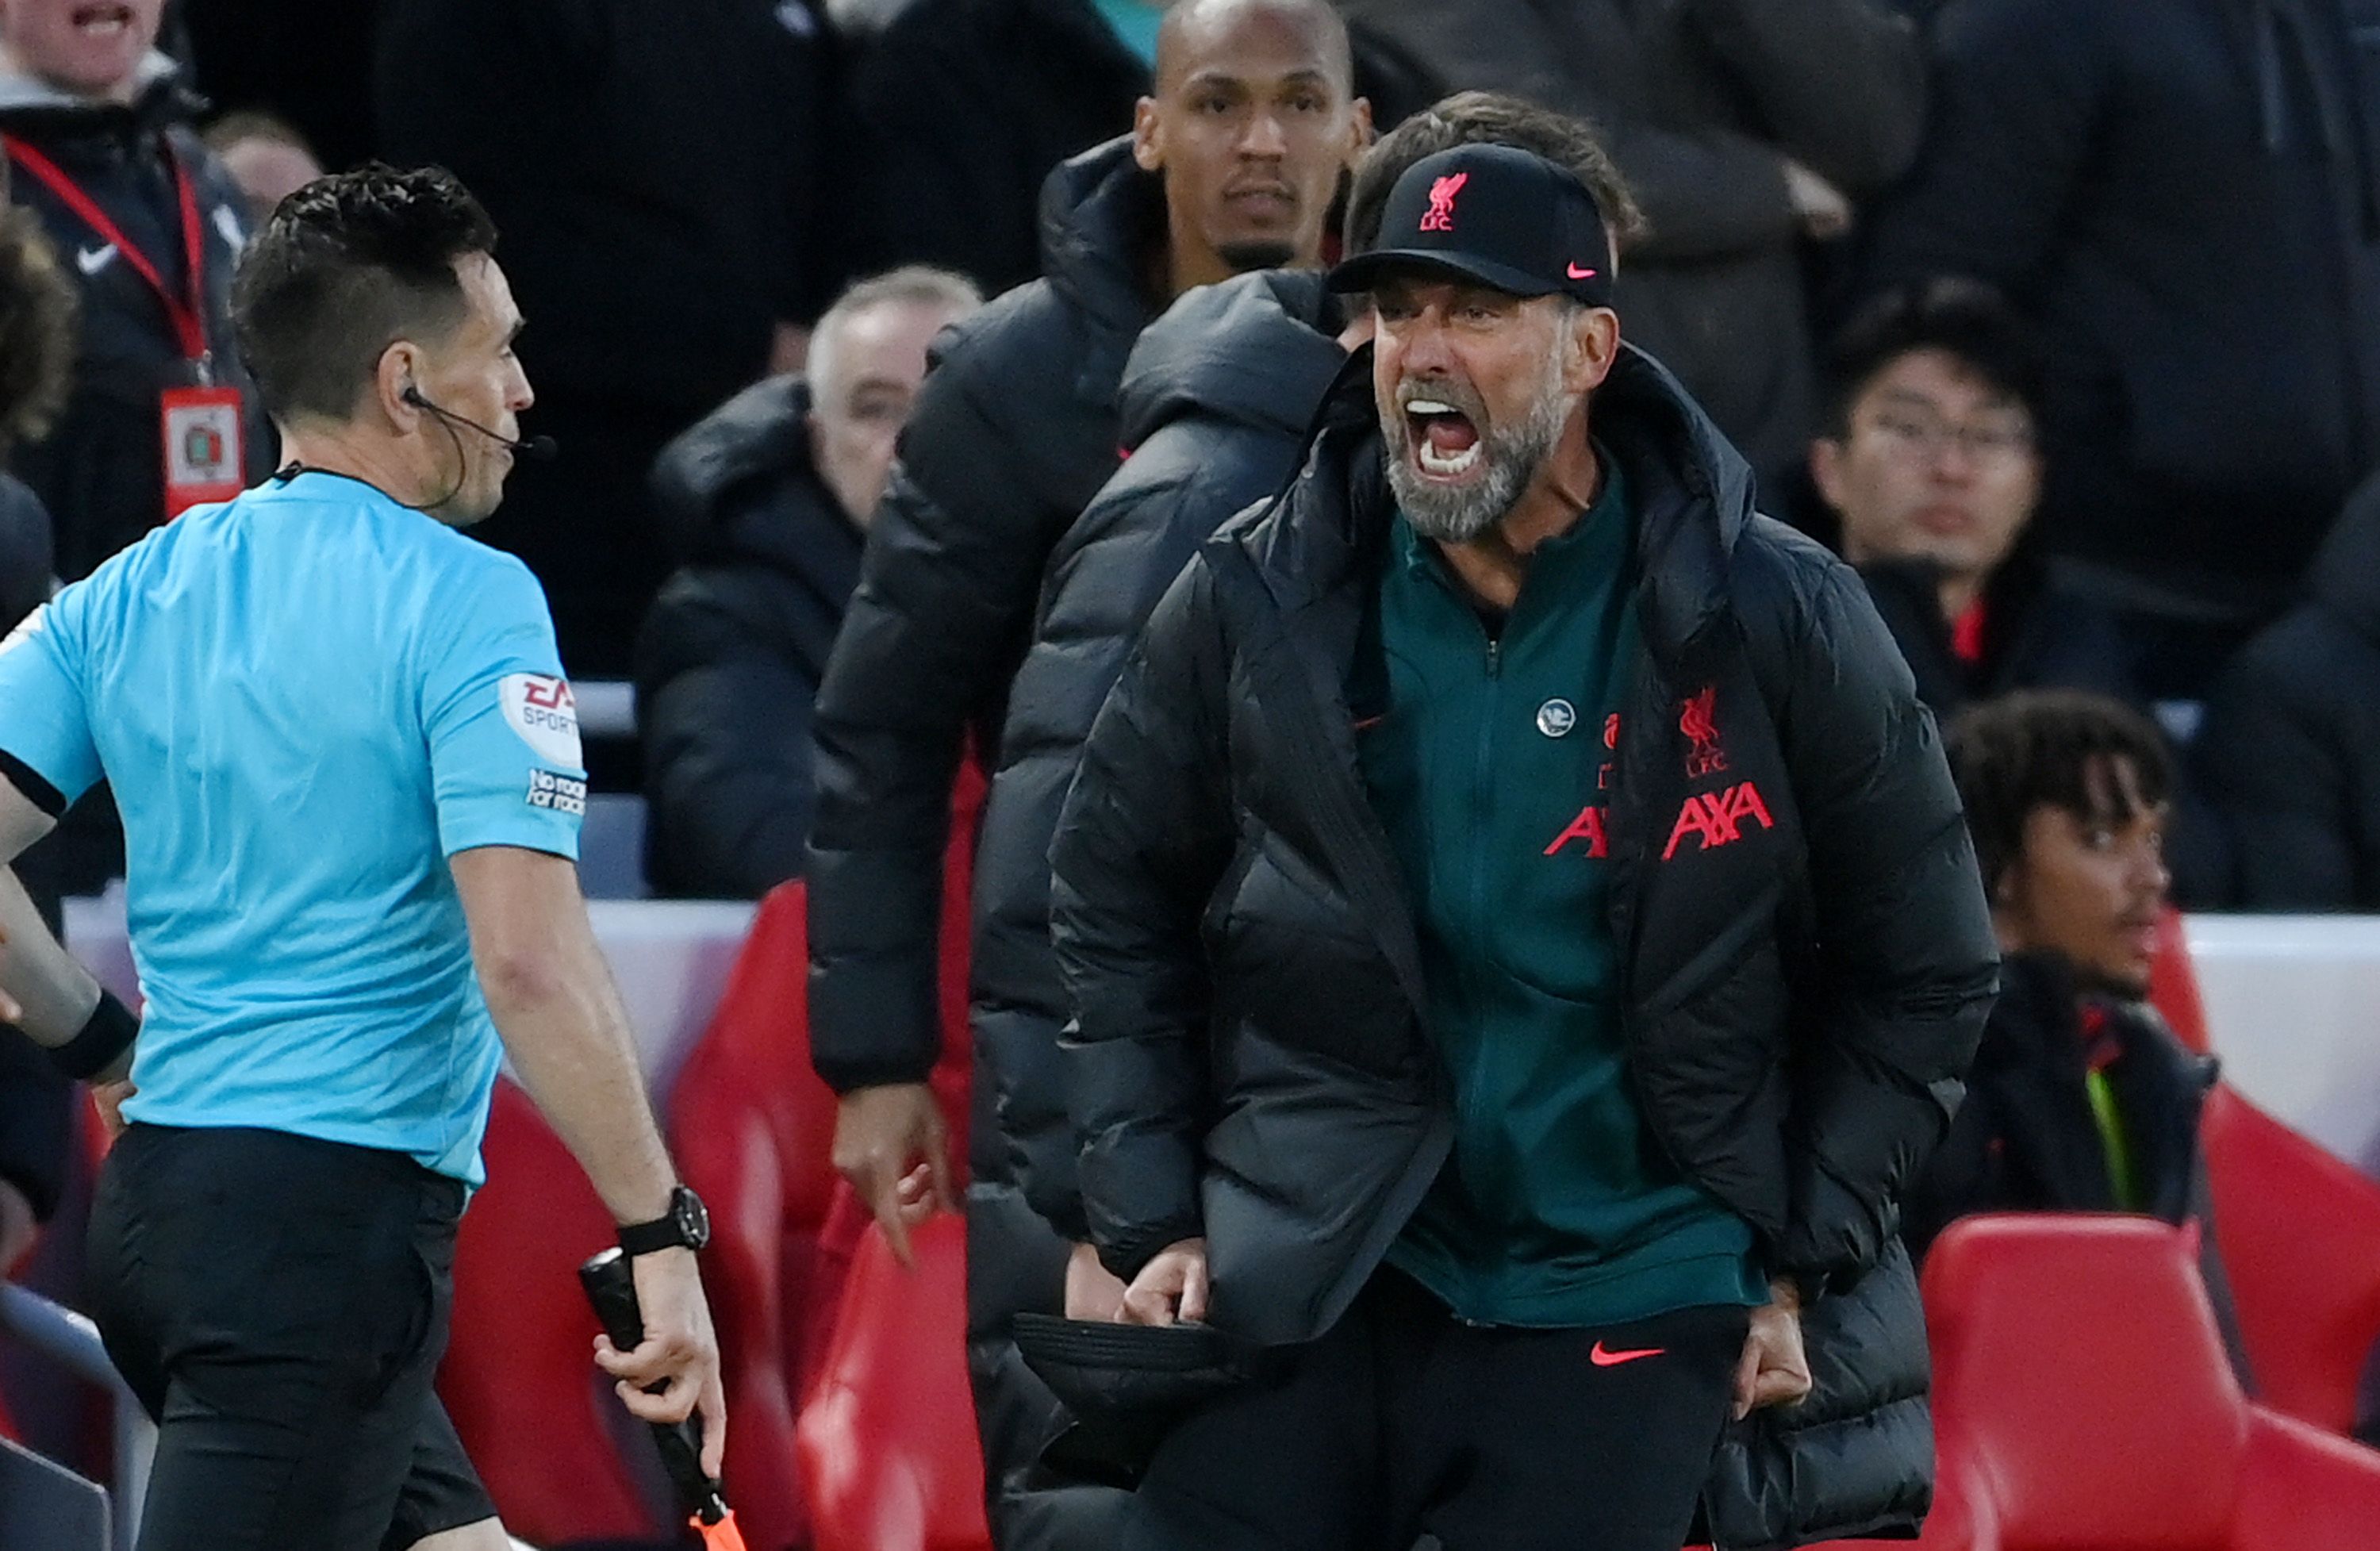 Liverpool manager Jurgen Klopp screaming at linesman